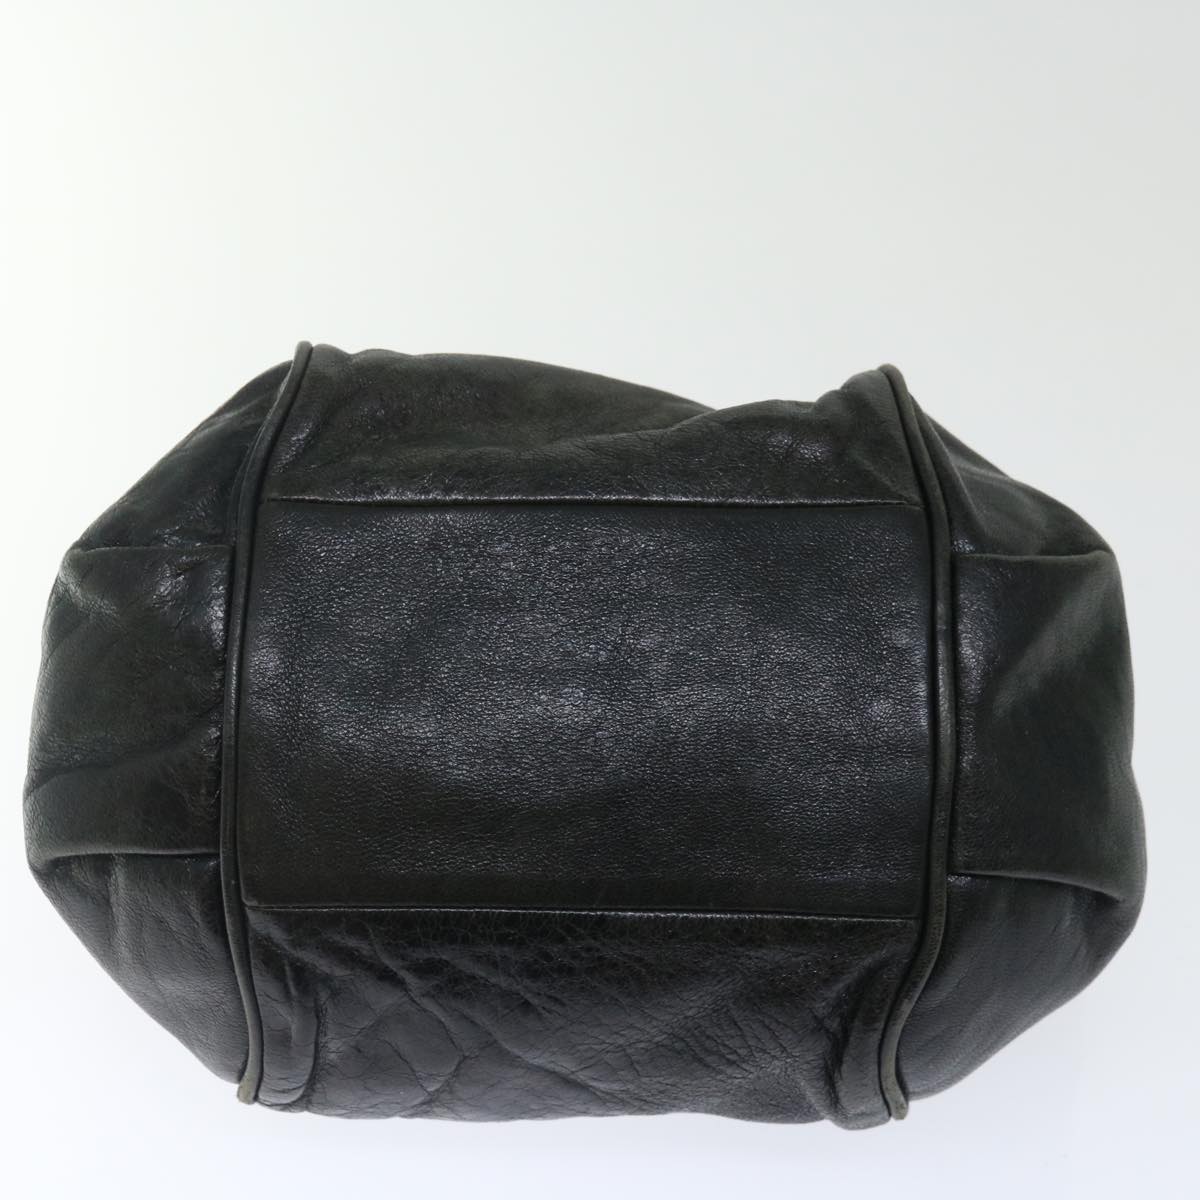 Chloe Etel Hand Bag Leather 2way Black Auth ar11745